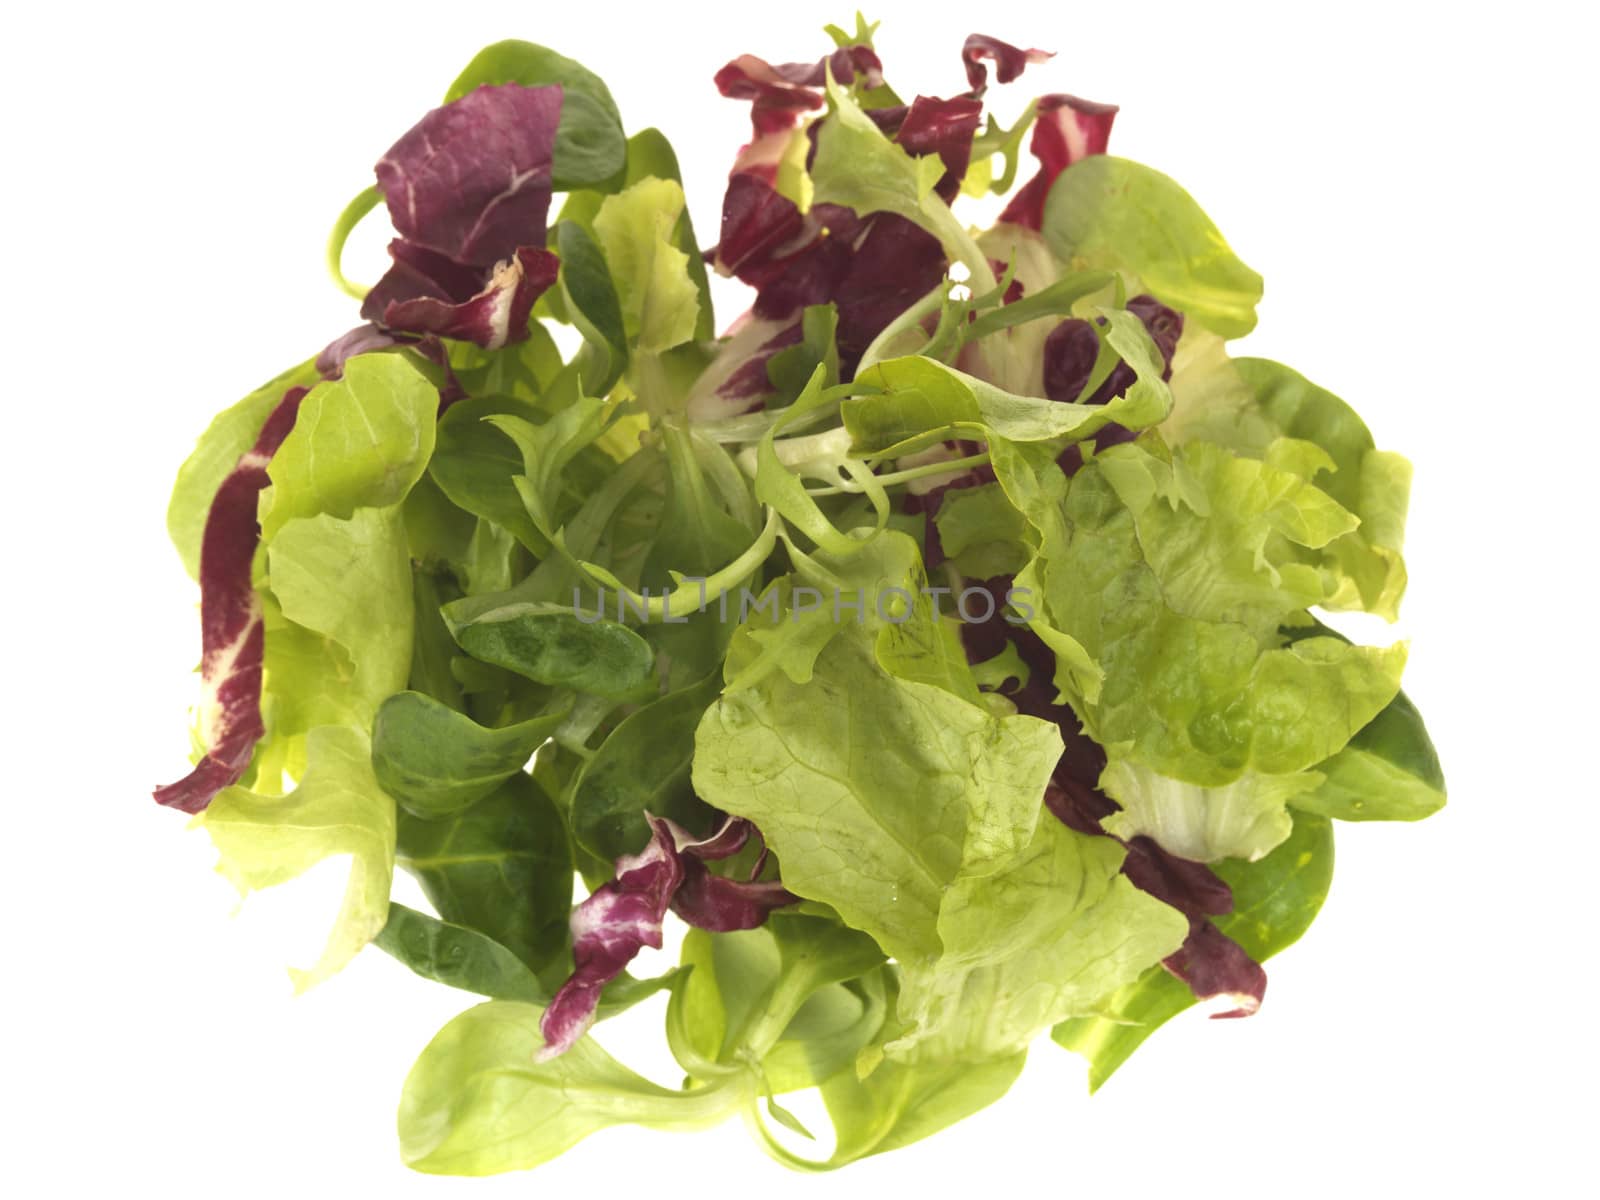 Mixed Salad Lettuce Leaves Isolated White Background